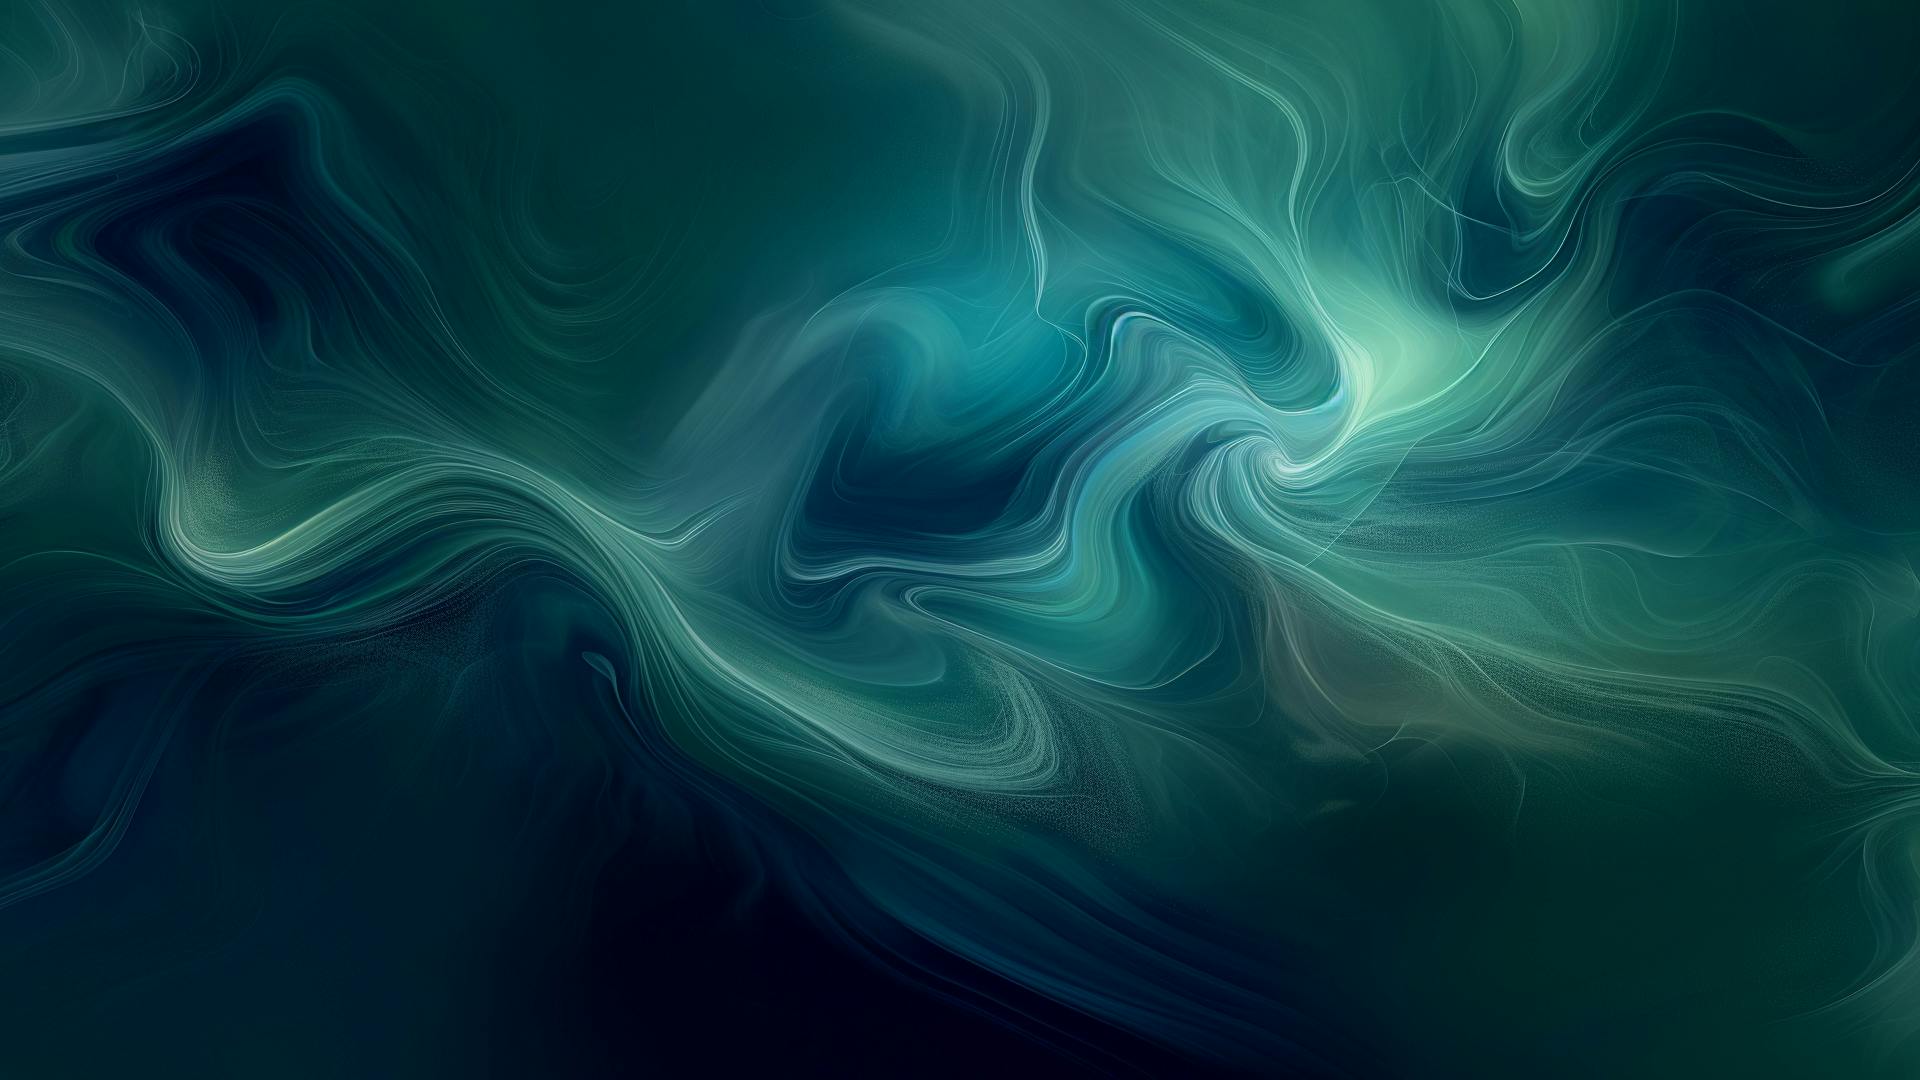 Swirly abstract illustration